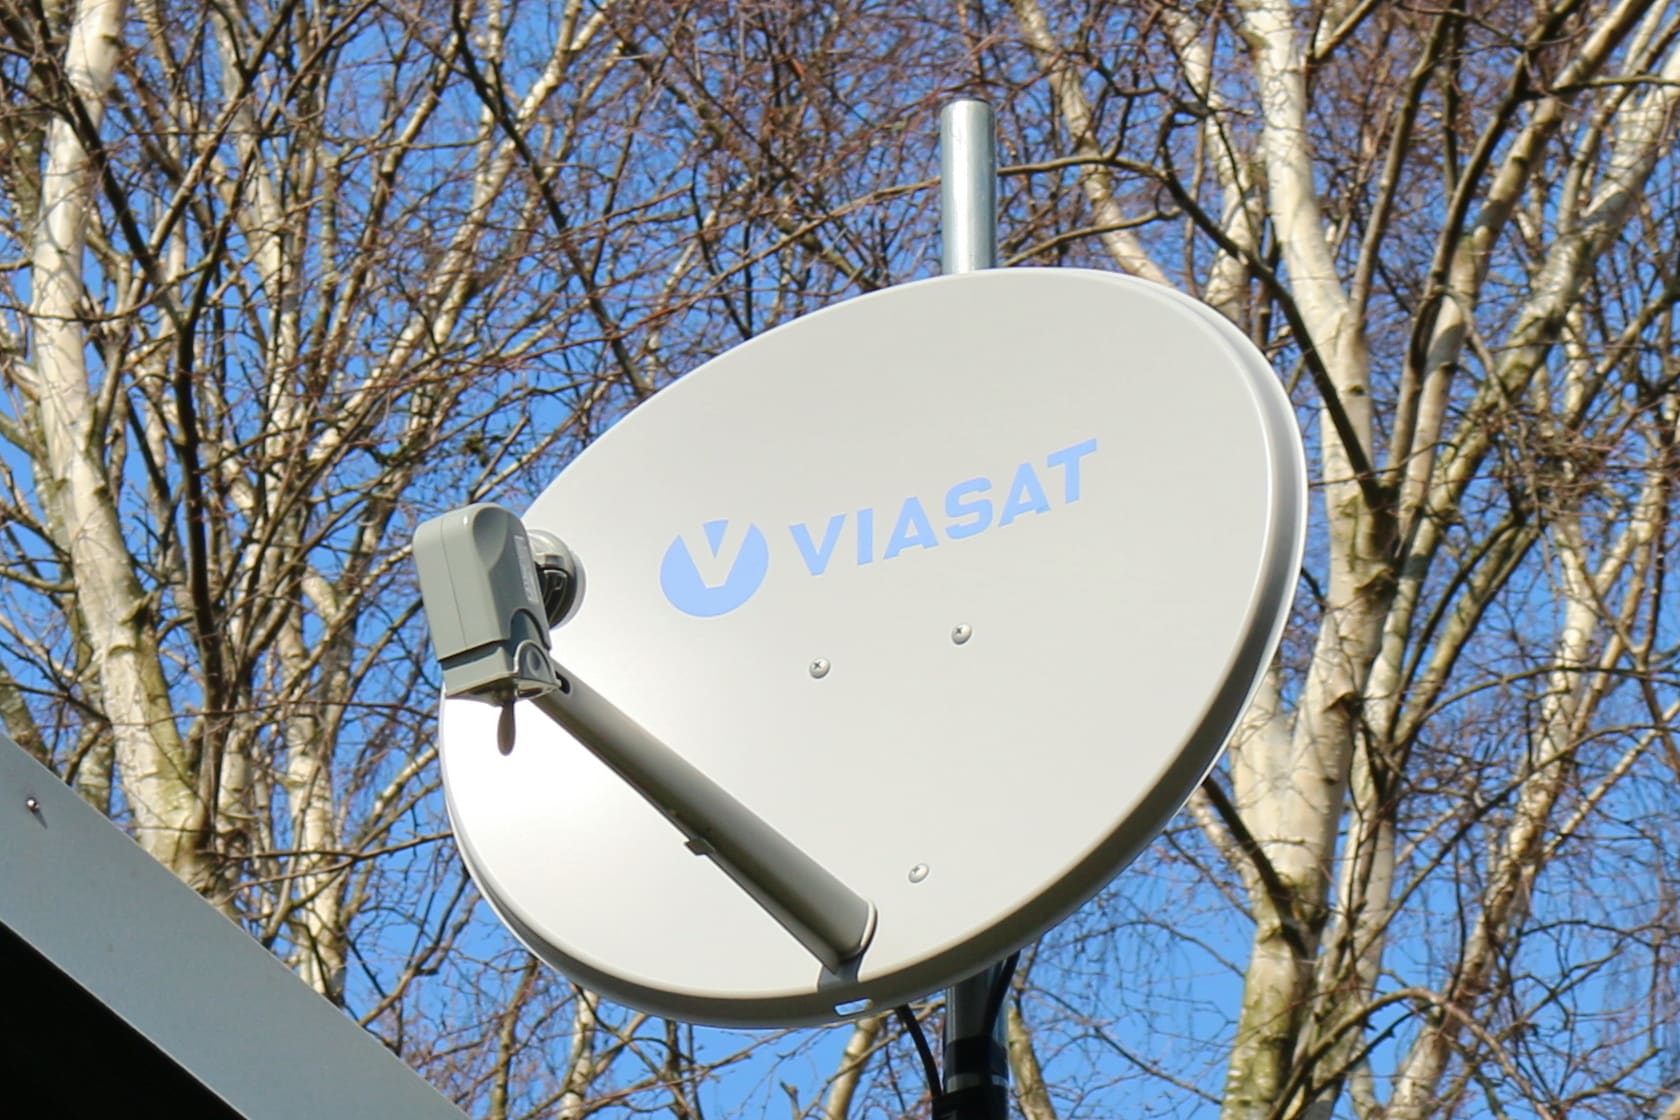 viasat satellite internet